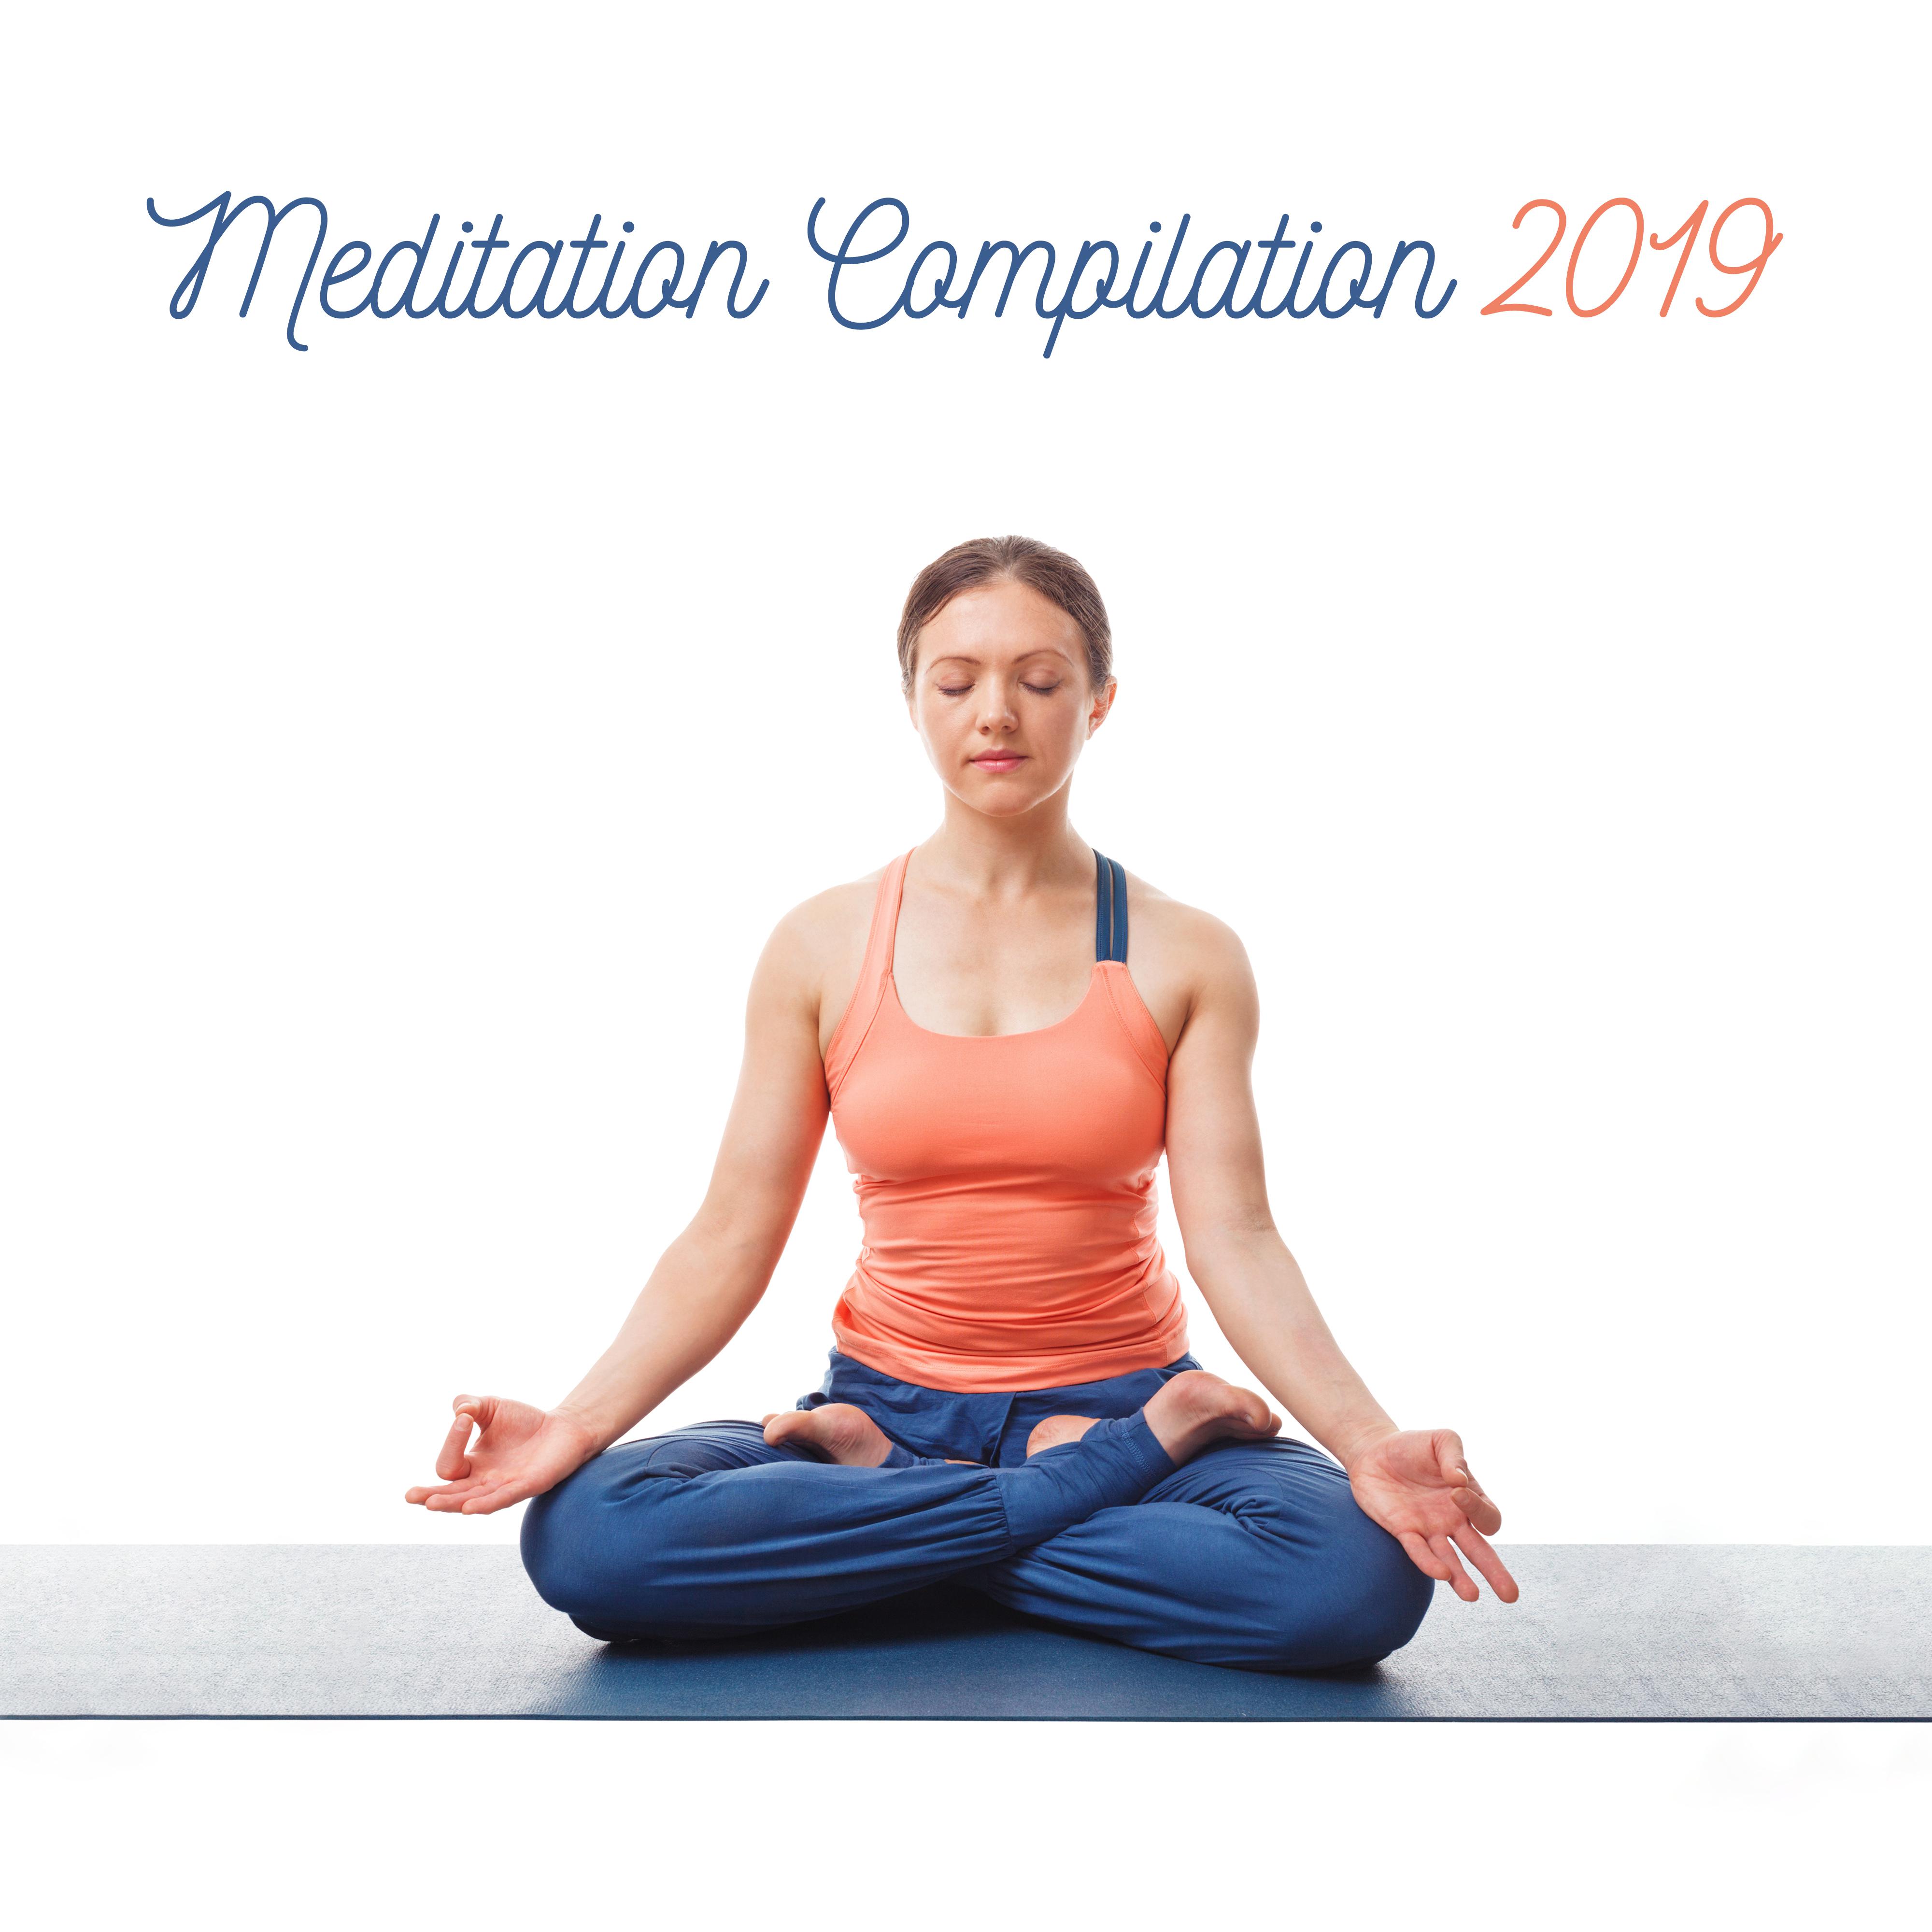 Meditation Compilation 2019 - Harmony Yoga Music, Oriental Yoga, Meditation Music Zone, Yoga Training, Soothing Sounds to Calm Down, Yoga Meditation